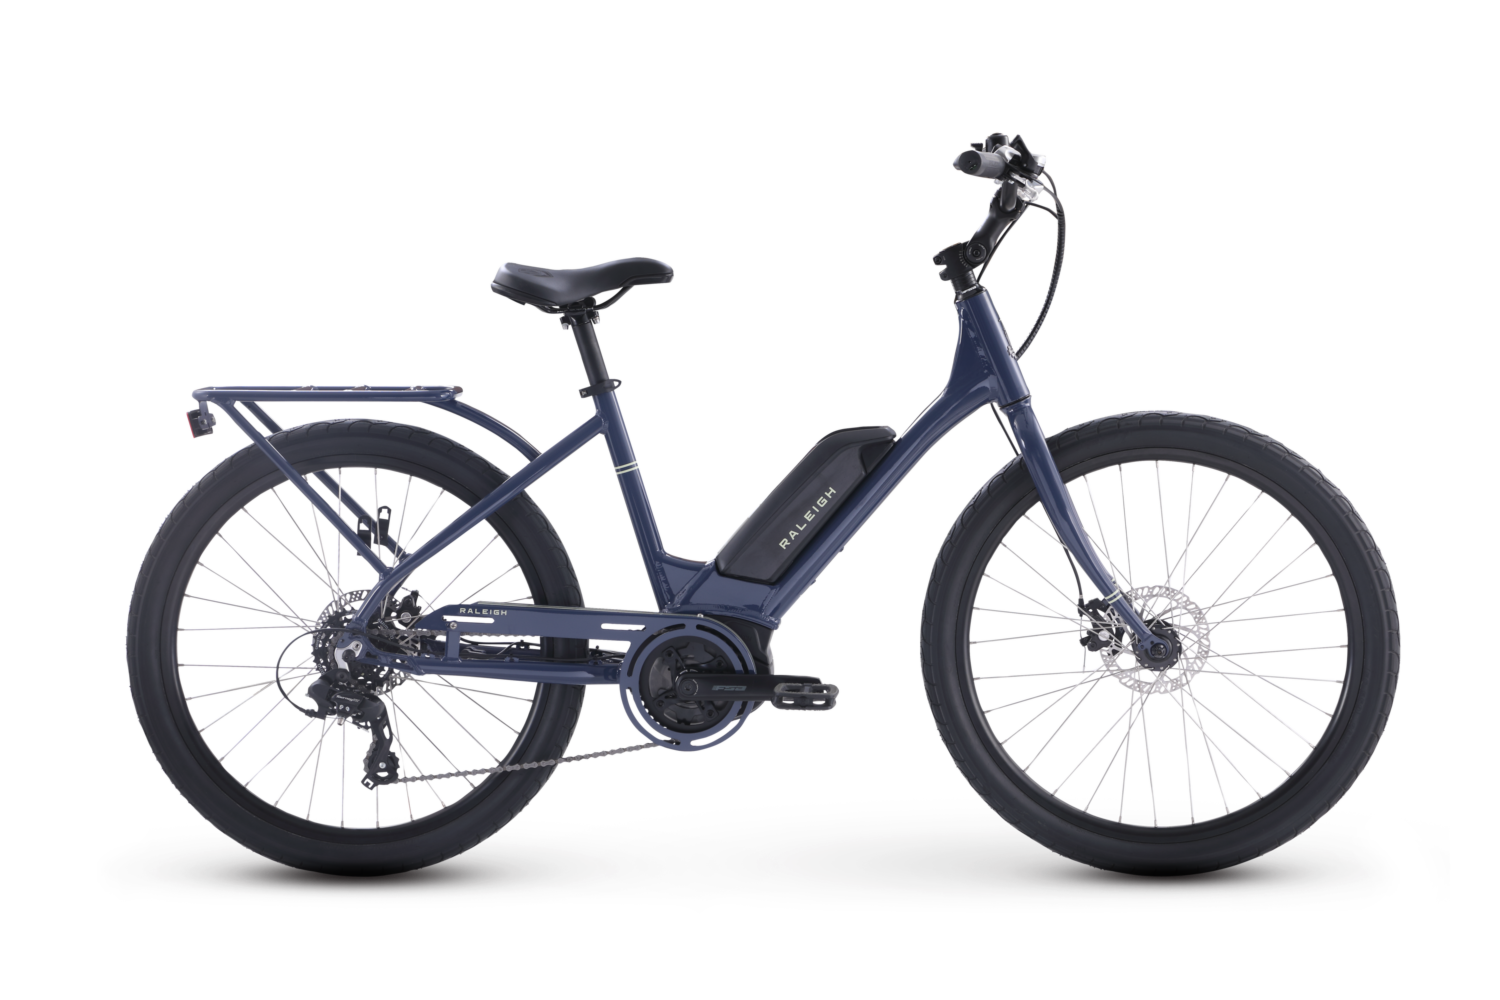 swytch electric bike conversion kit cost